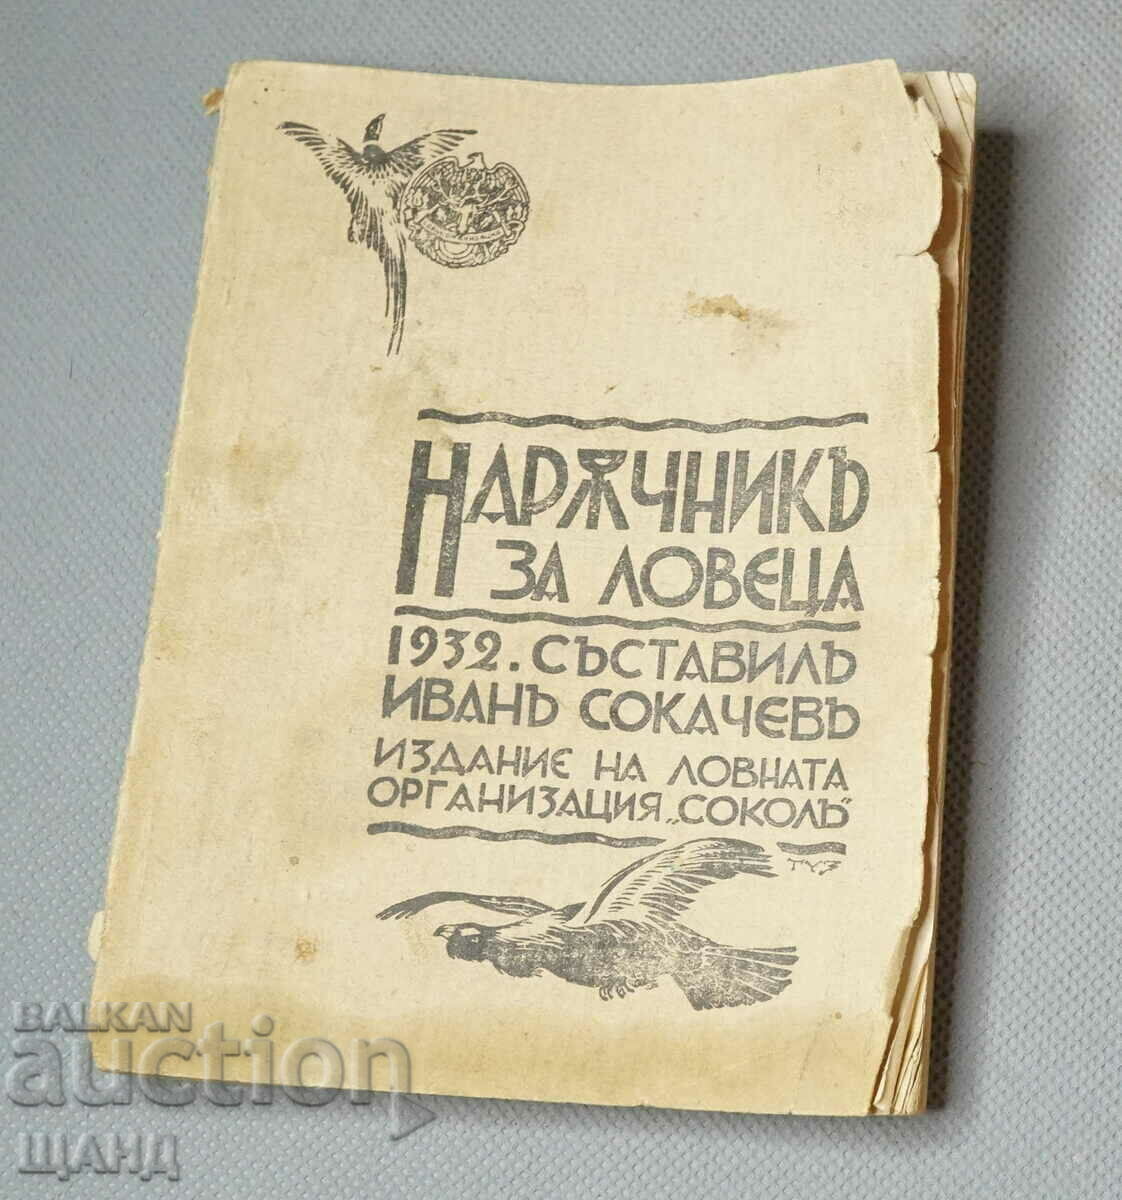 1932 Hunter's Handbook Book for a hunter's association